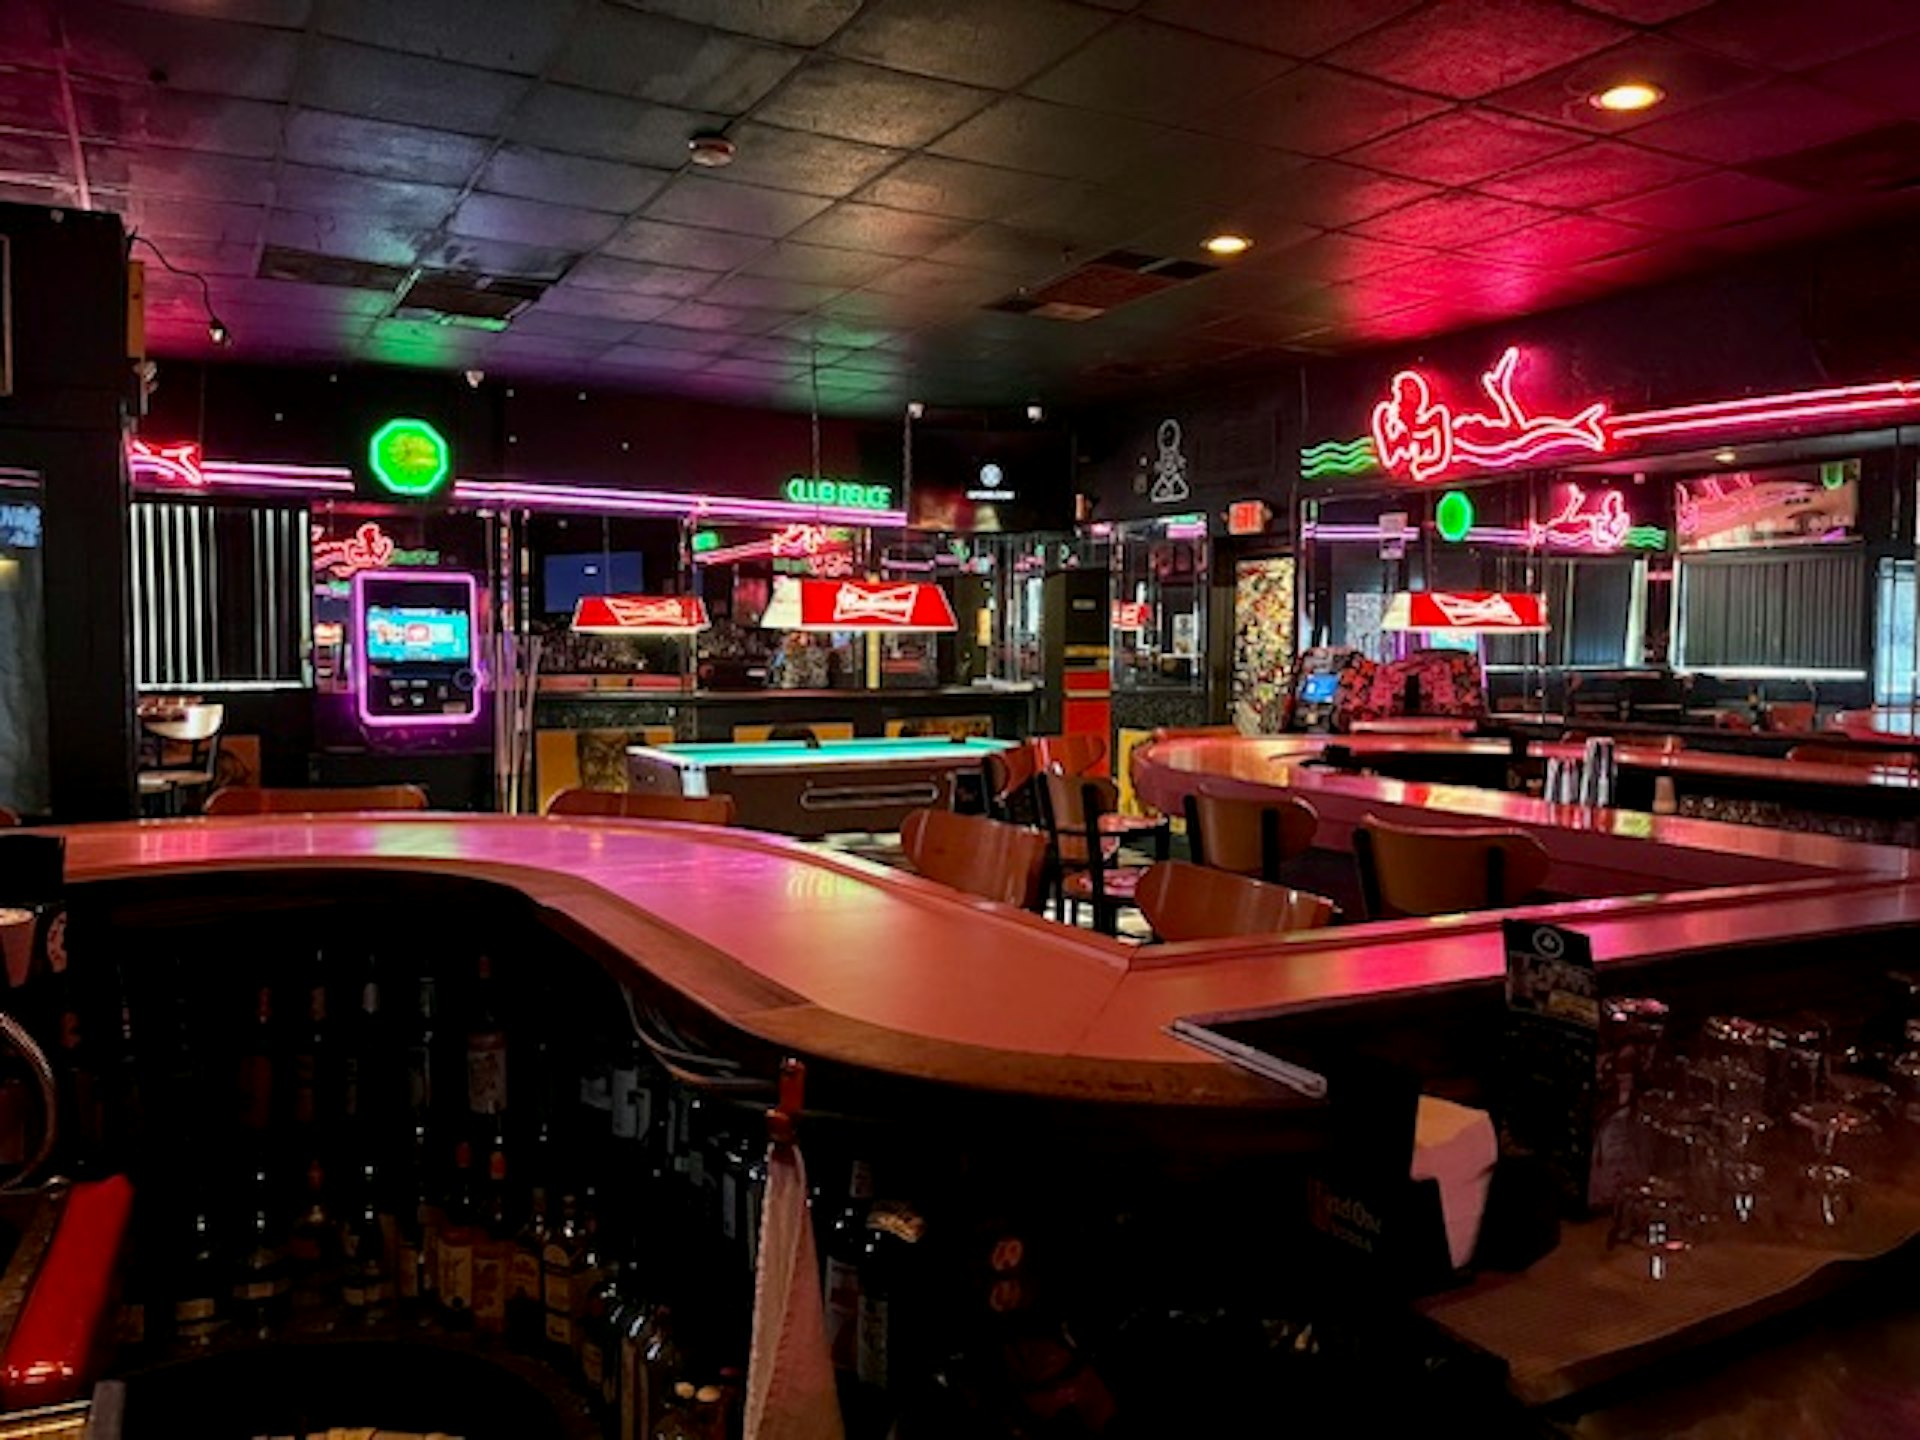 Interior of Mac's Club Deuce, shot from behind the bar